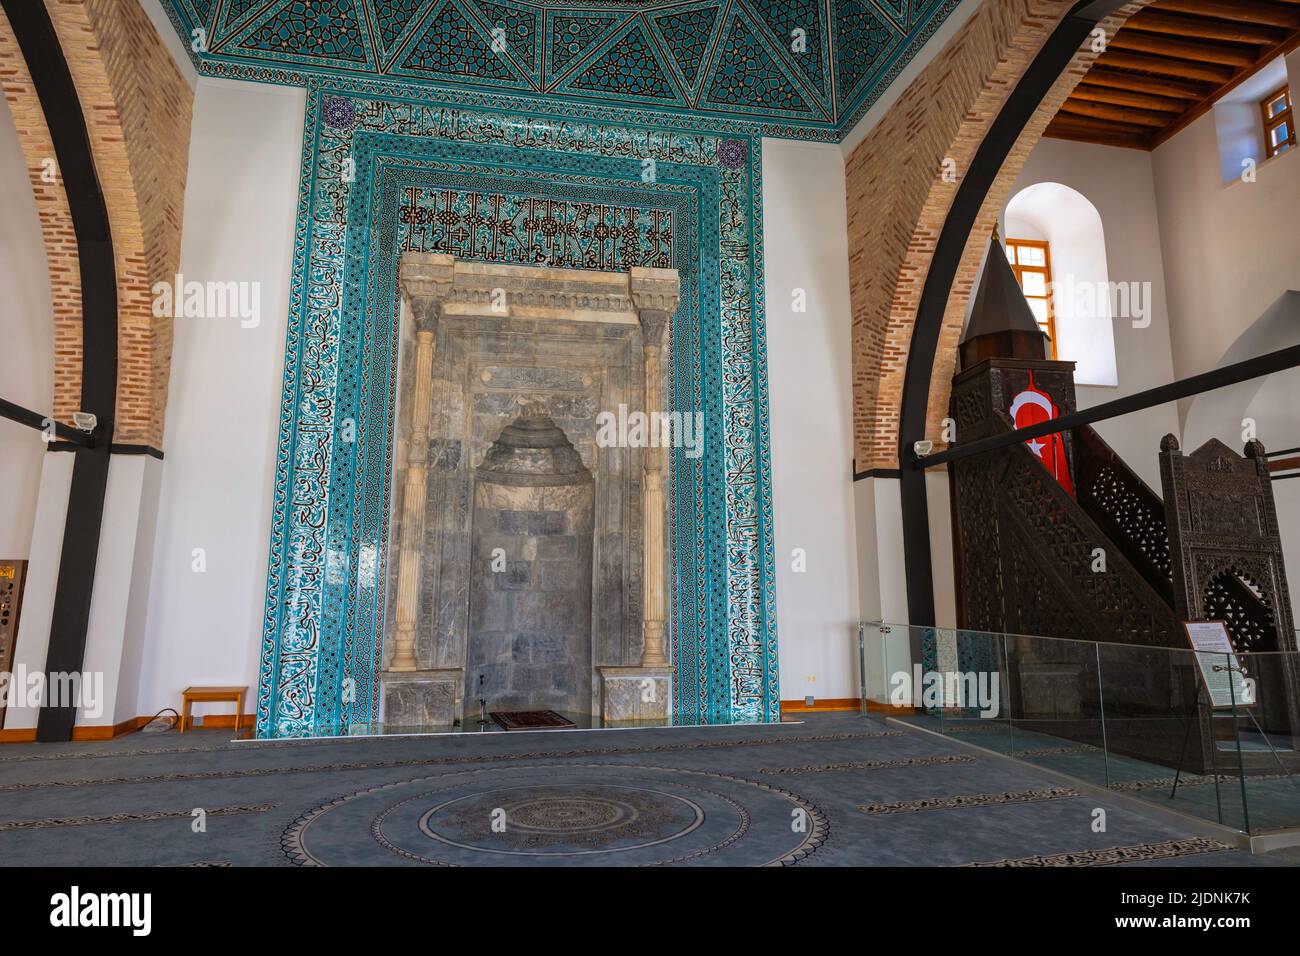 Moschea di Alaaddin Keykubad. Minbar e mihrab della moschea Konya Alaaddin Keykubad. Architettura islamica foto di sfondo. Konya Turchia - 5.18.2022 Foto Stock